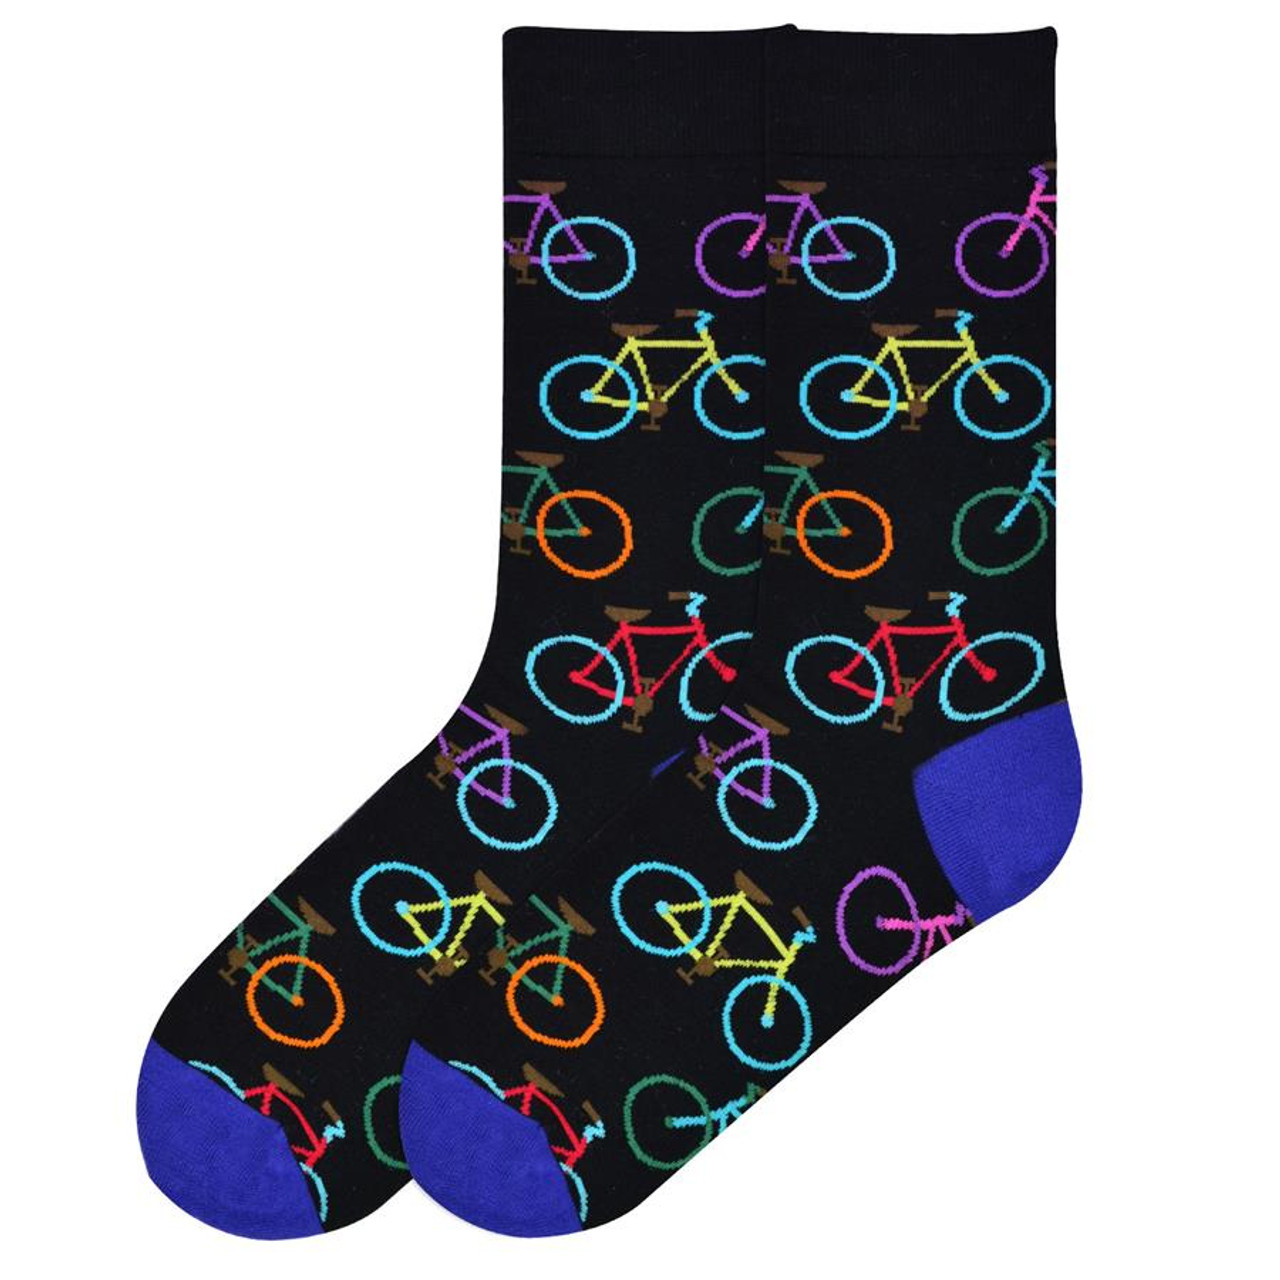 Fun Bright Bike Socks with Funky Colors